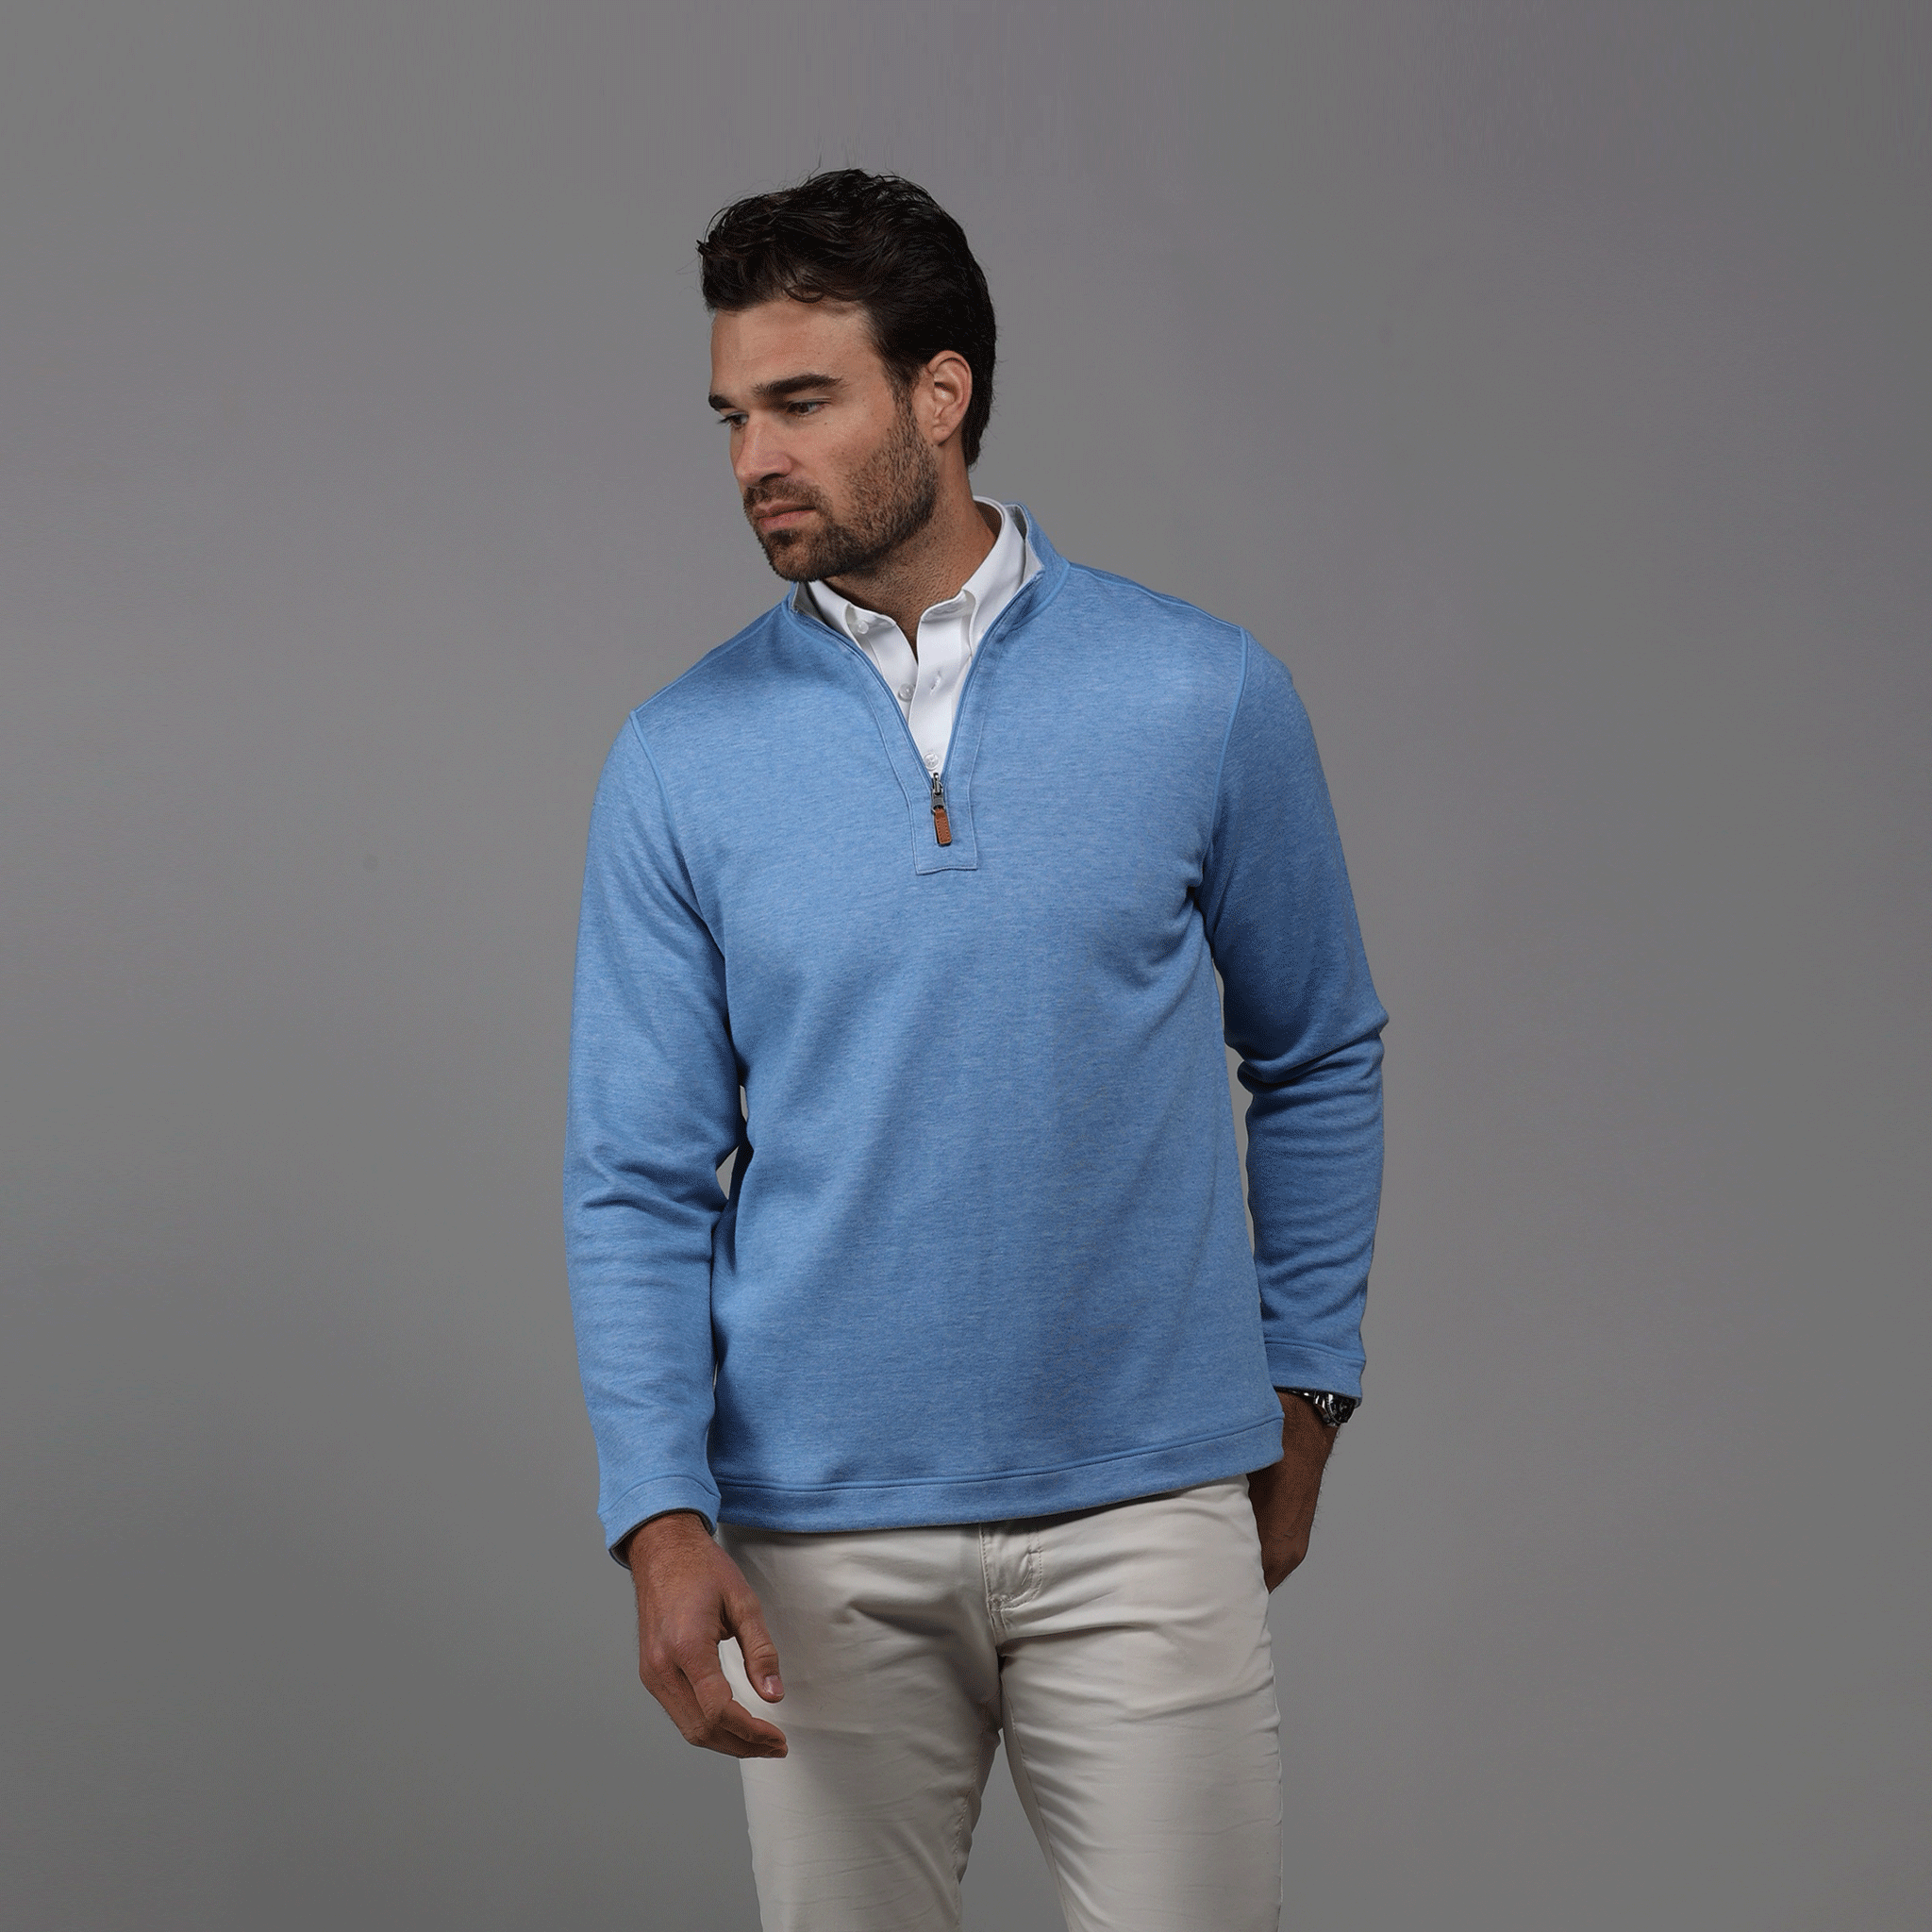 Sky Blue and Light Grey Cotton – & Blend Pullov Collars Zip Reversible Zen Quarter